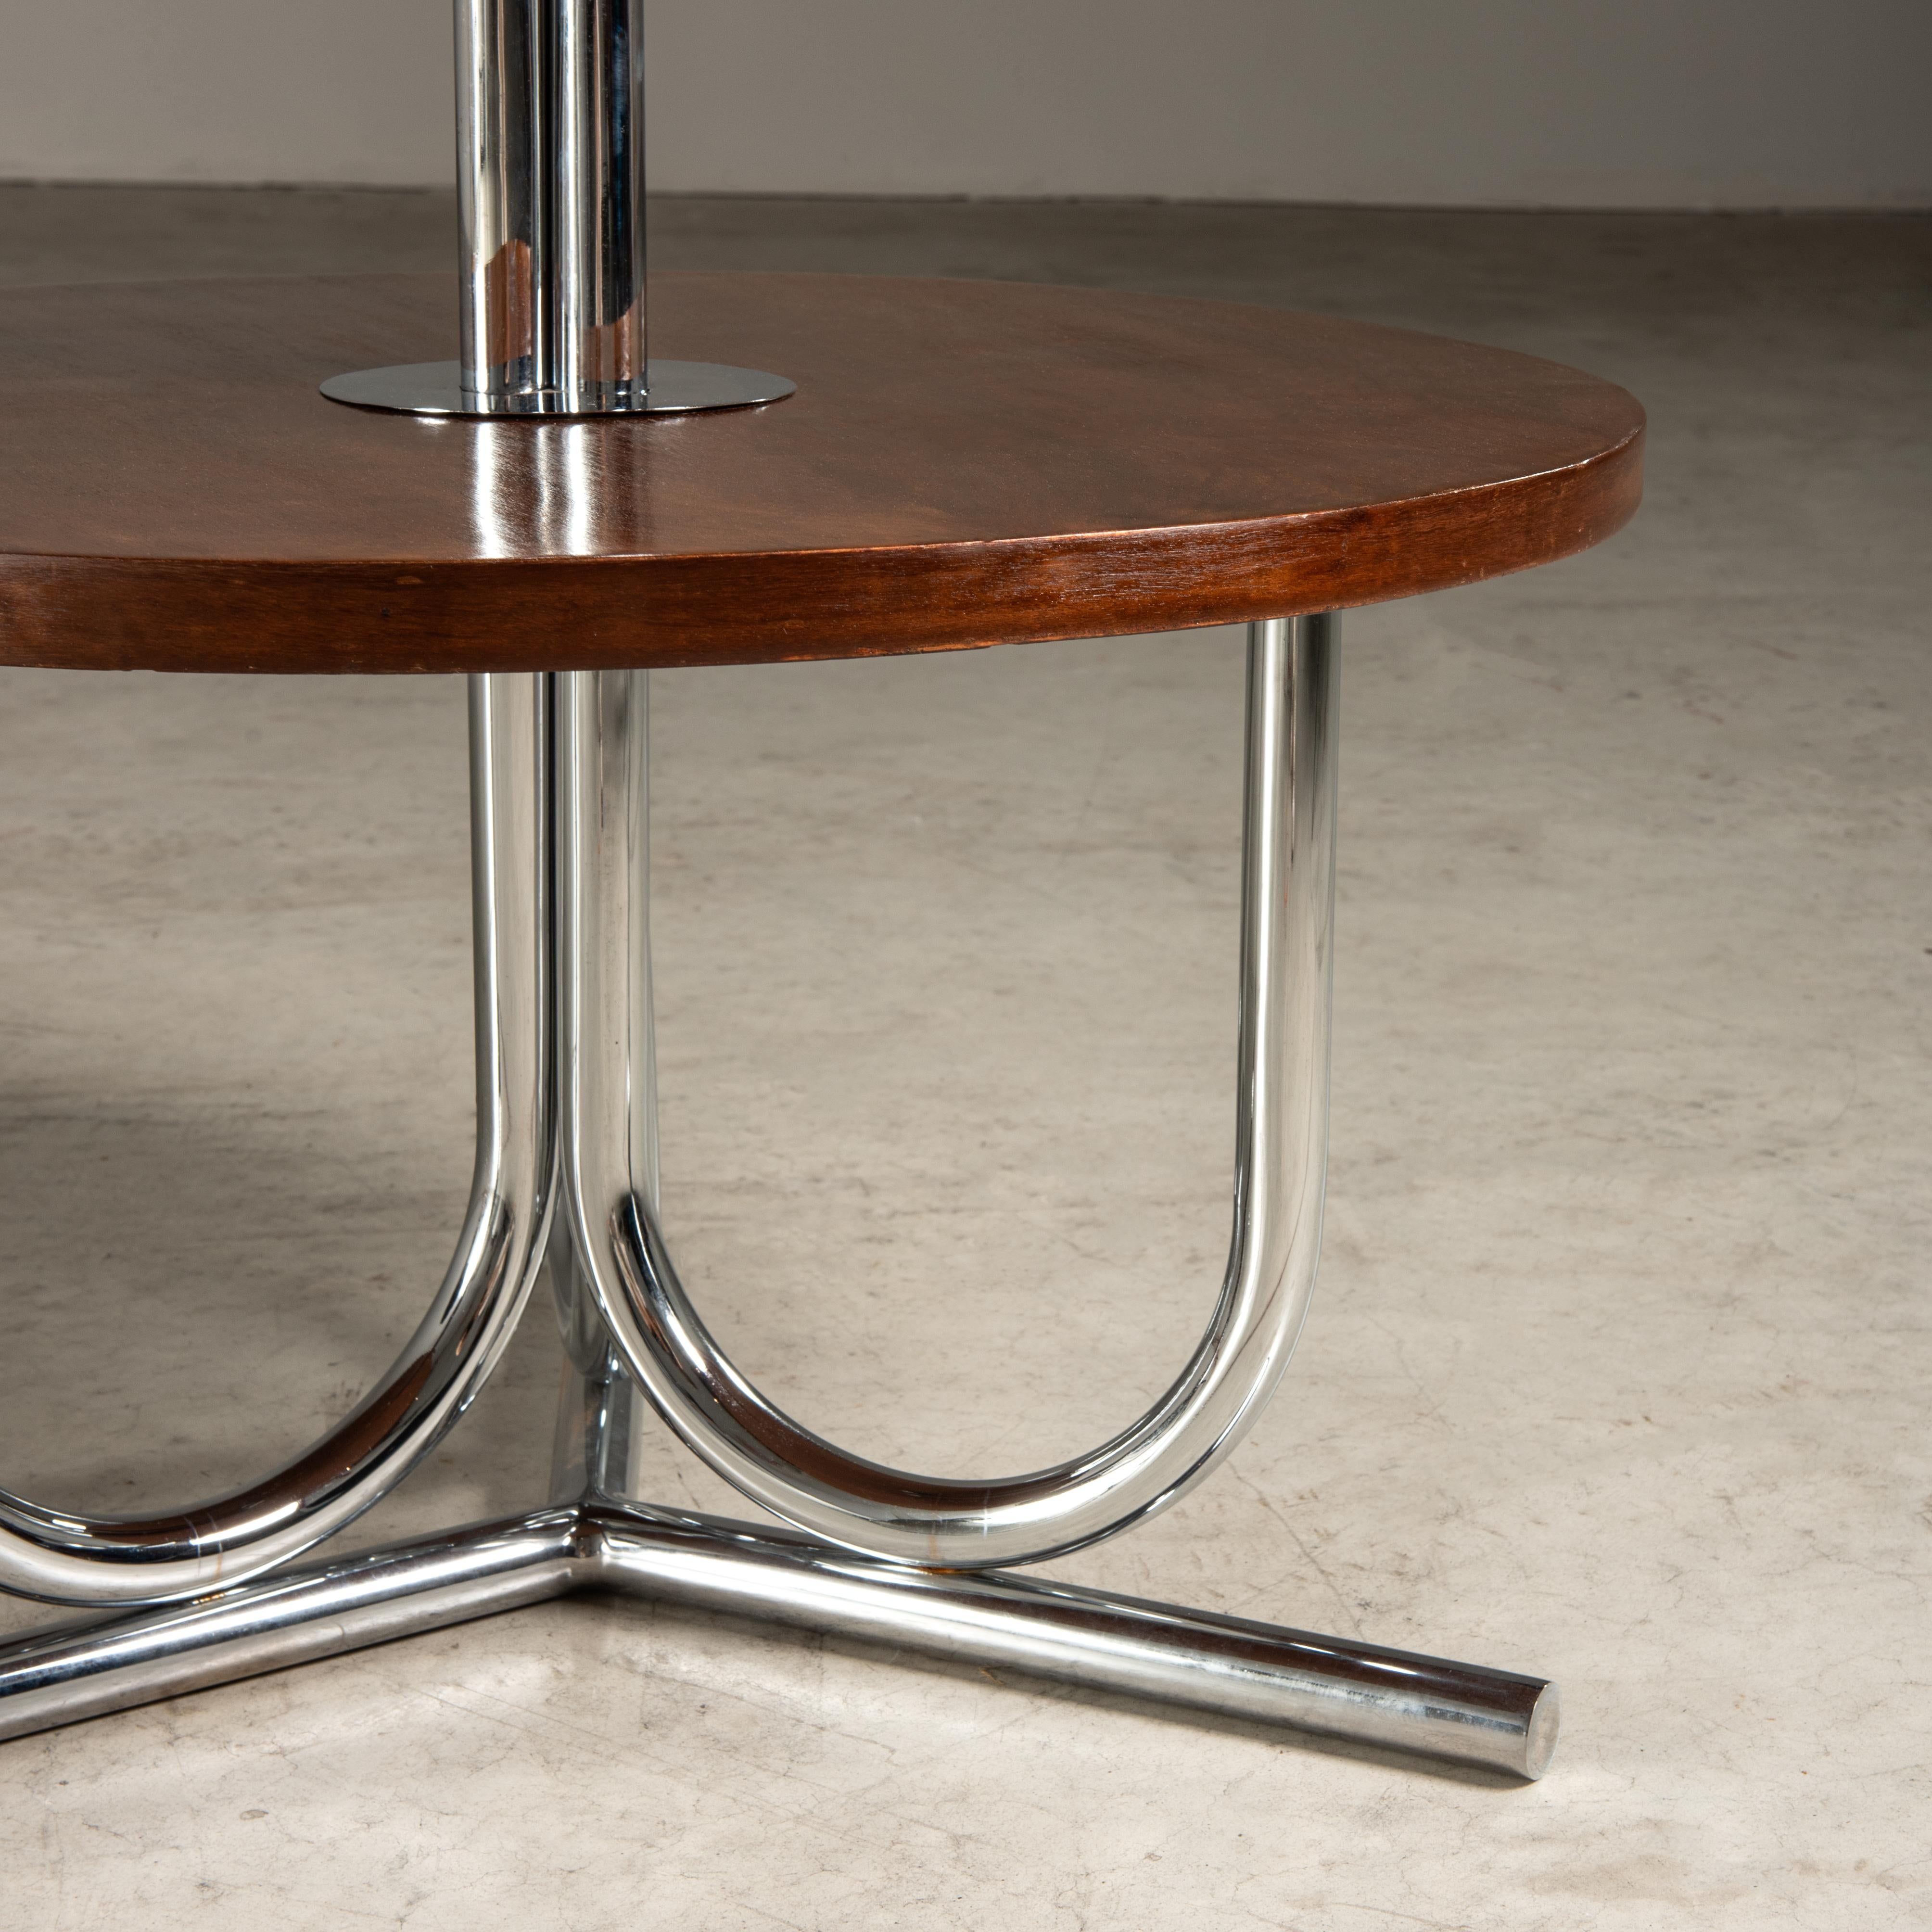 Art Deco Side Table In Tubular Metal and Wood, by John Graz, Brazilian Modern For Sale 1